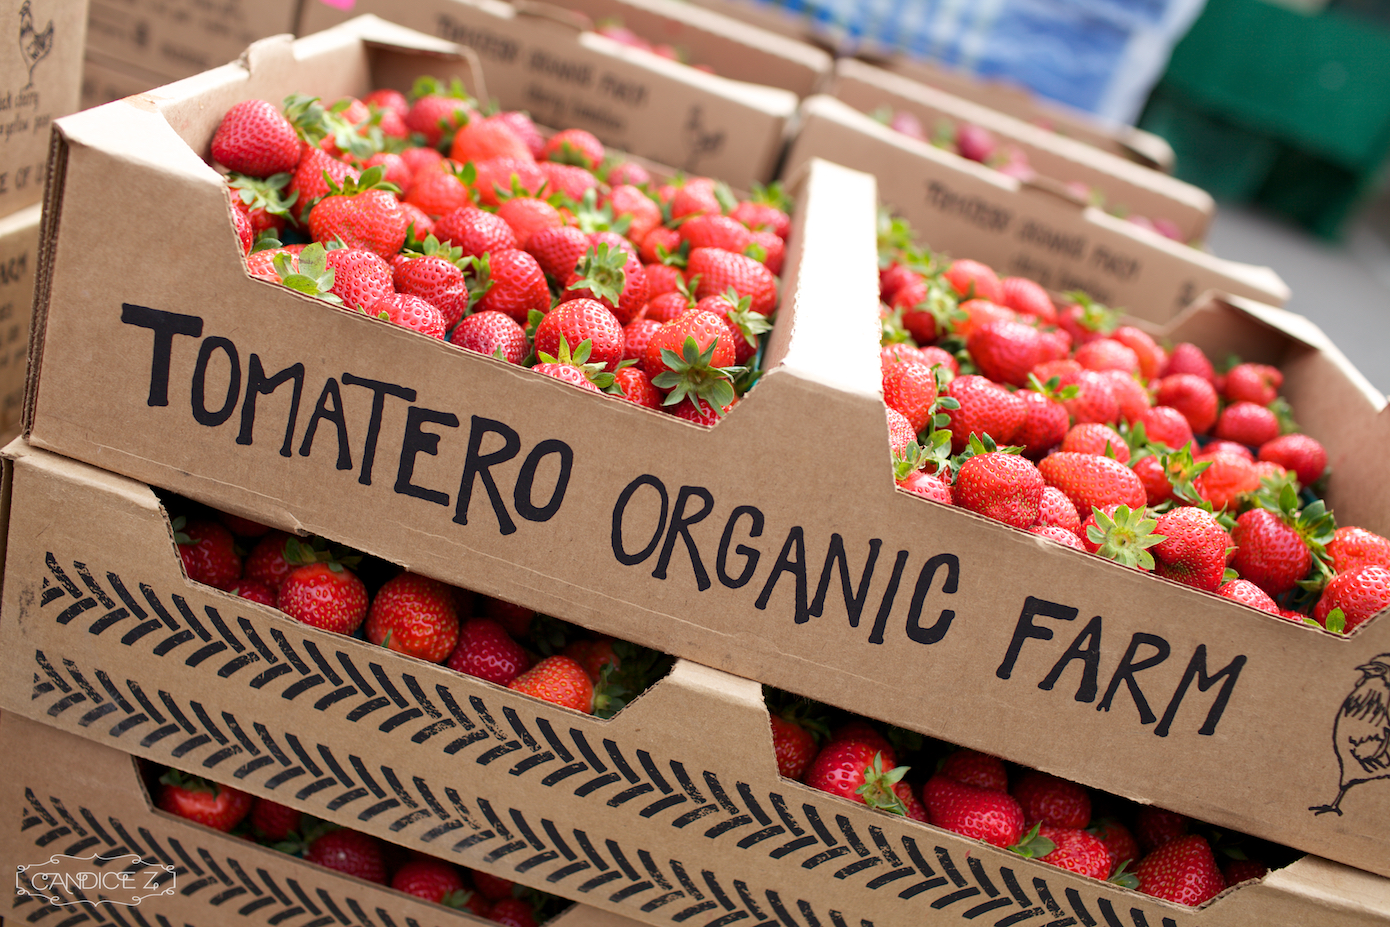 Tomatero Organic Farm.jpg